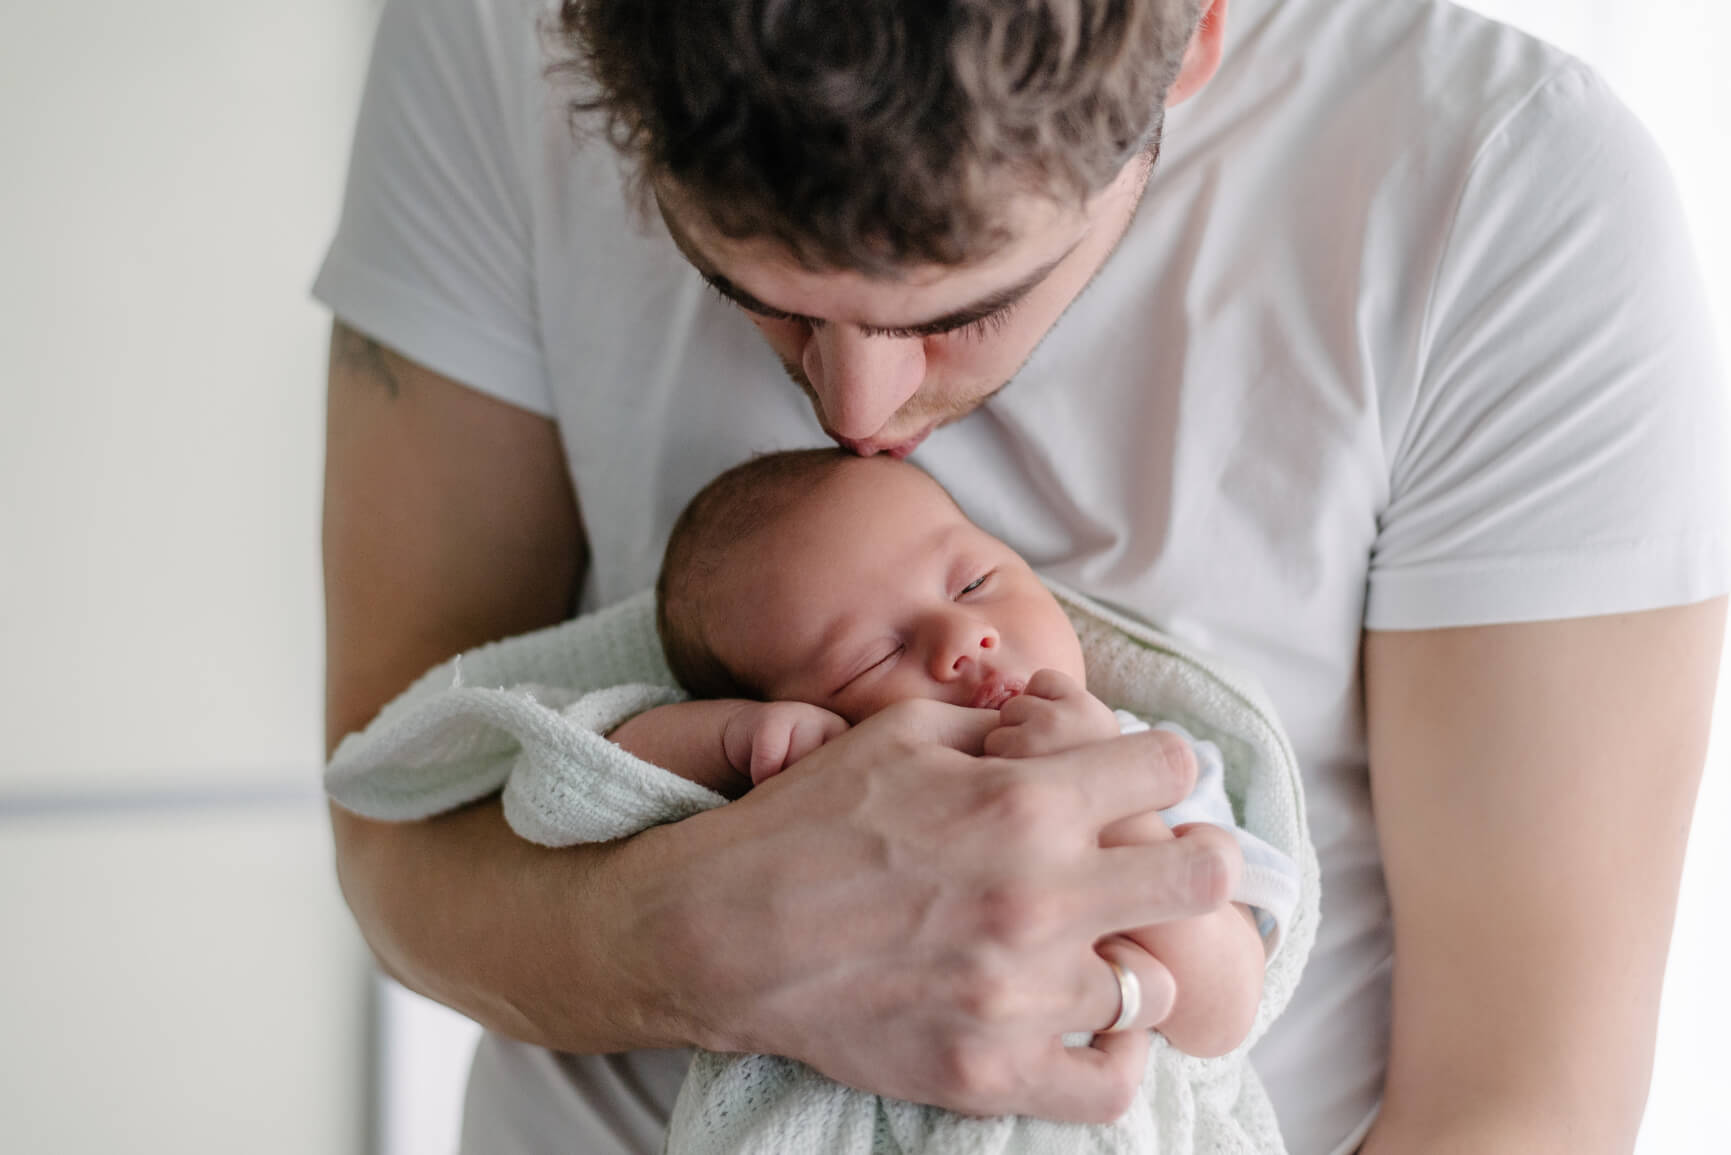 Recognising postnatal depression in men